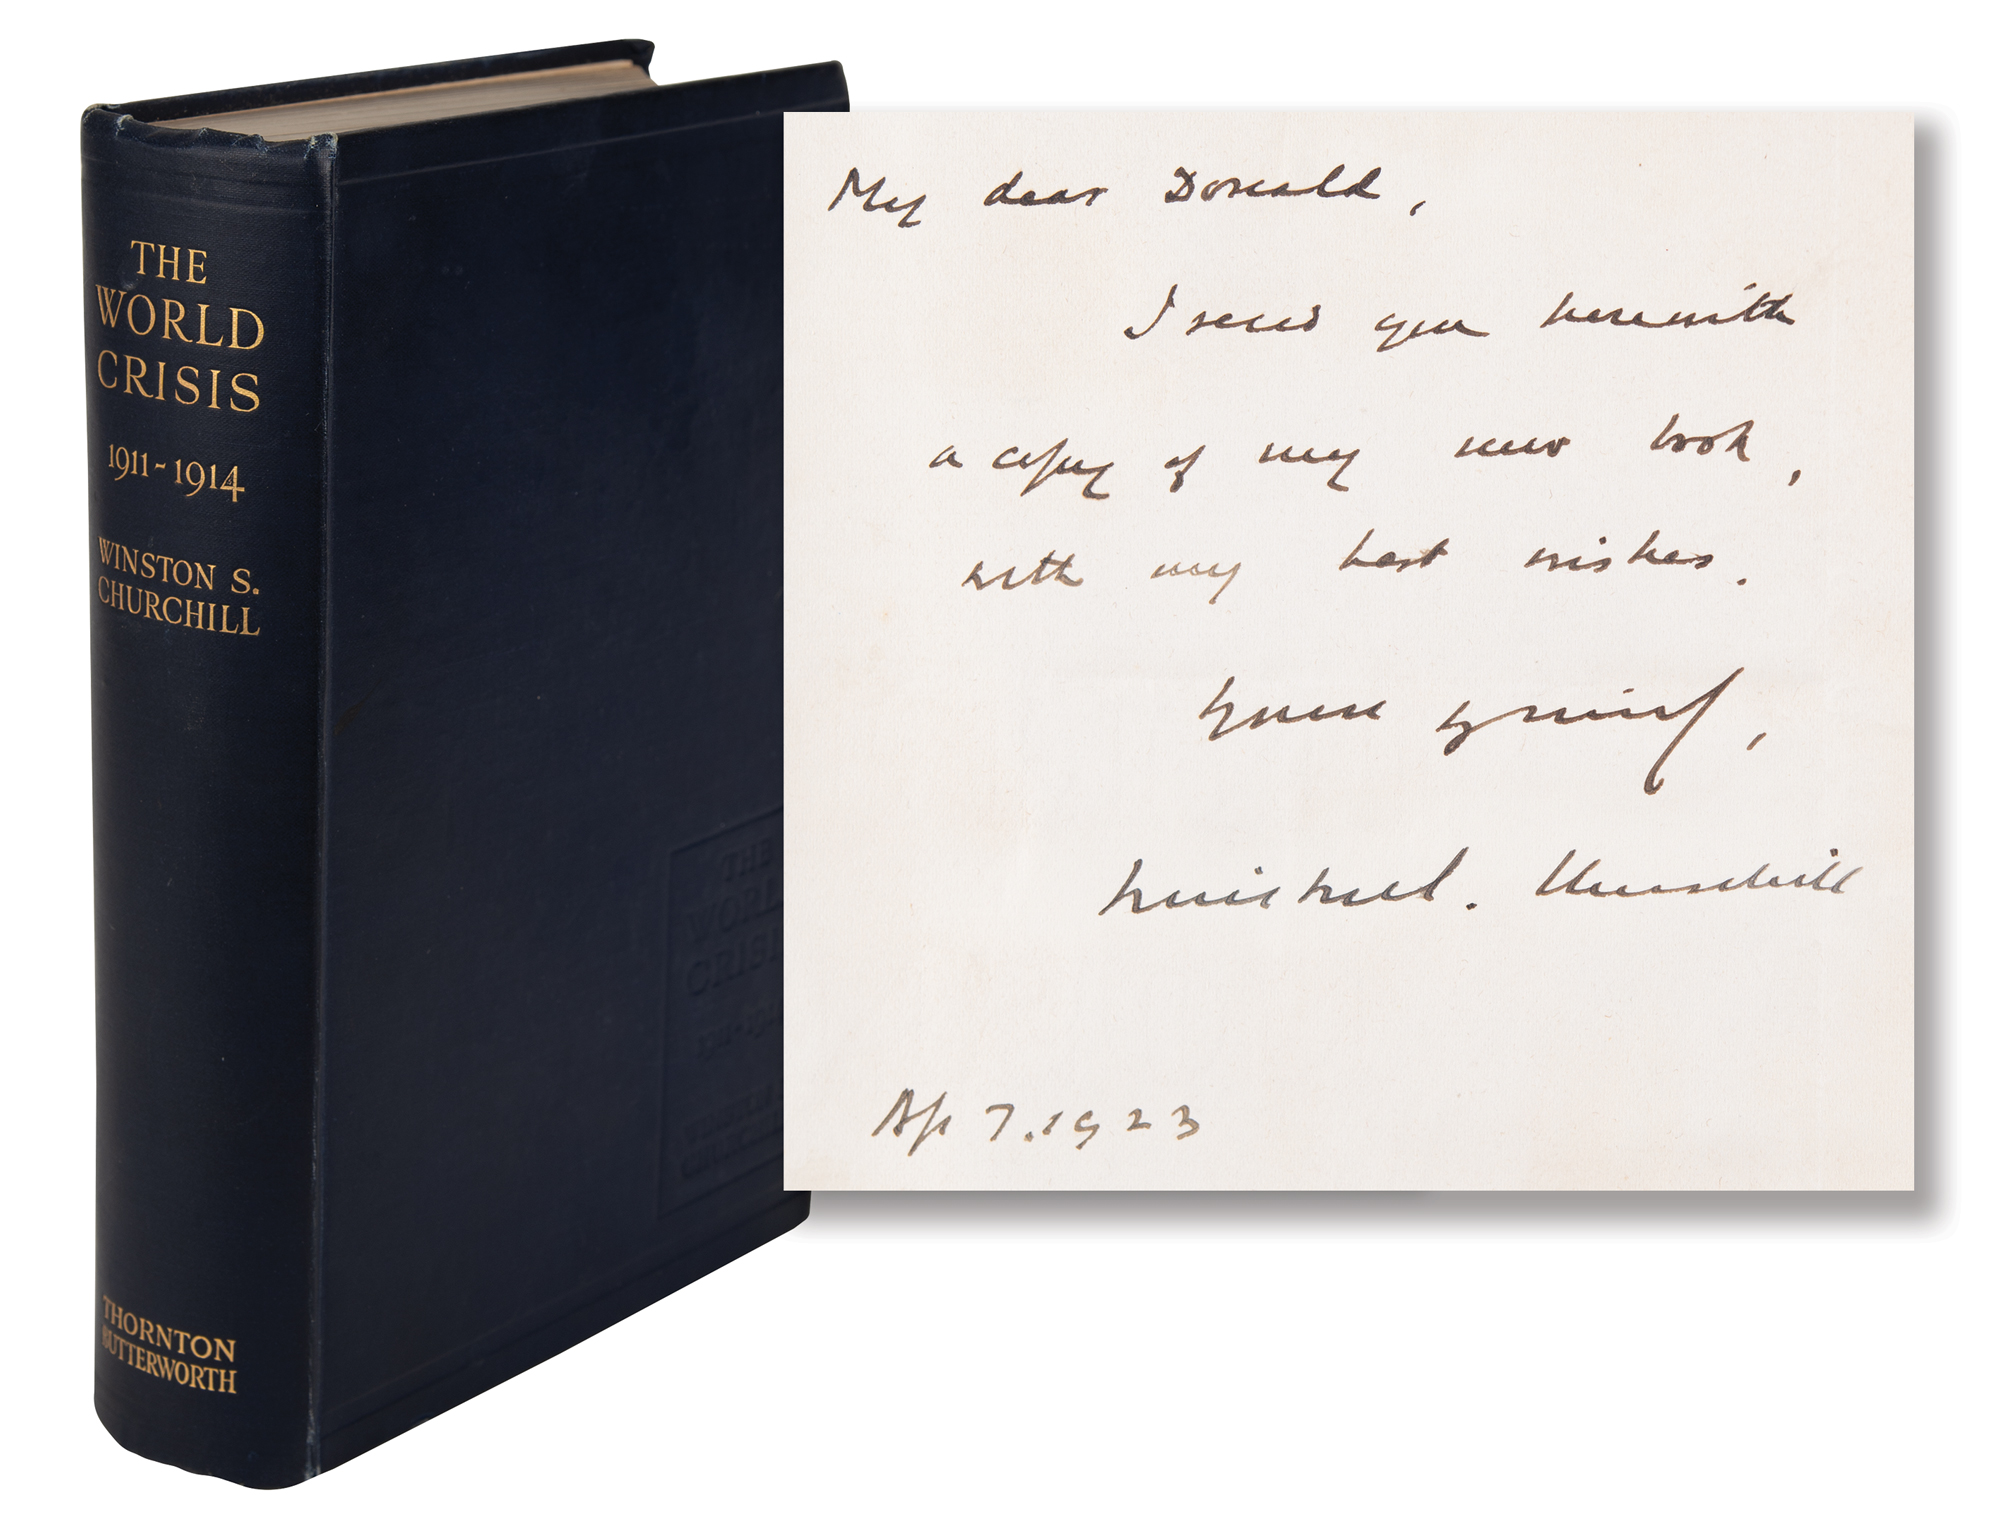 Lot #160 Winston Churchill Autograph Letter Signed